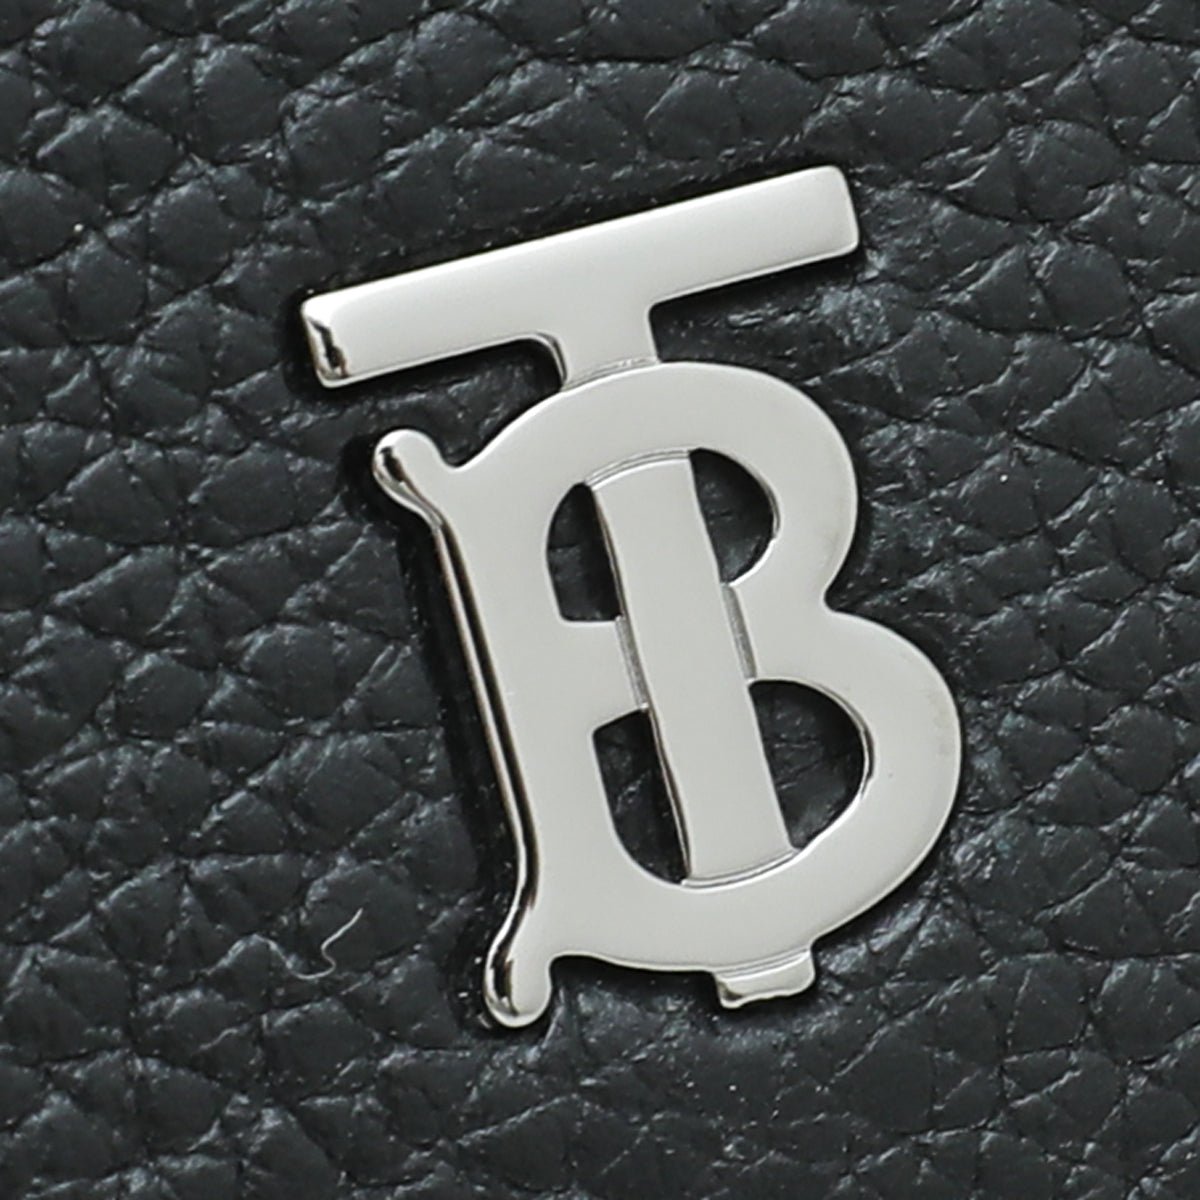 Burberry - Burberry Black TB Neck Wallet | The Closet